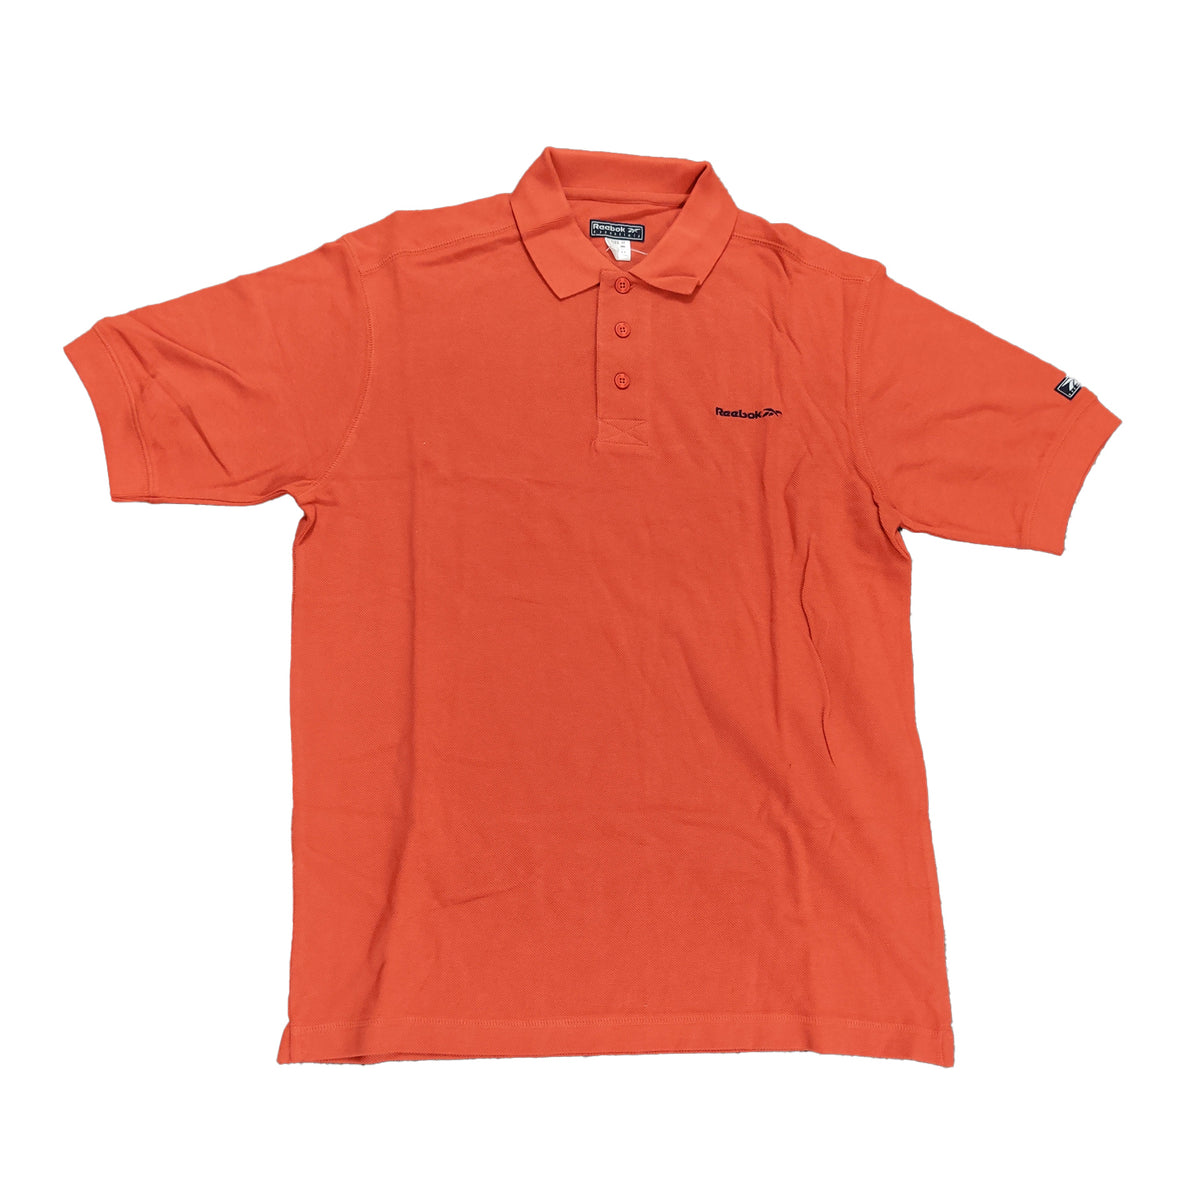 Reebok Mens Clearance Bright Orange Polo Shirt - Medium